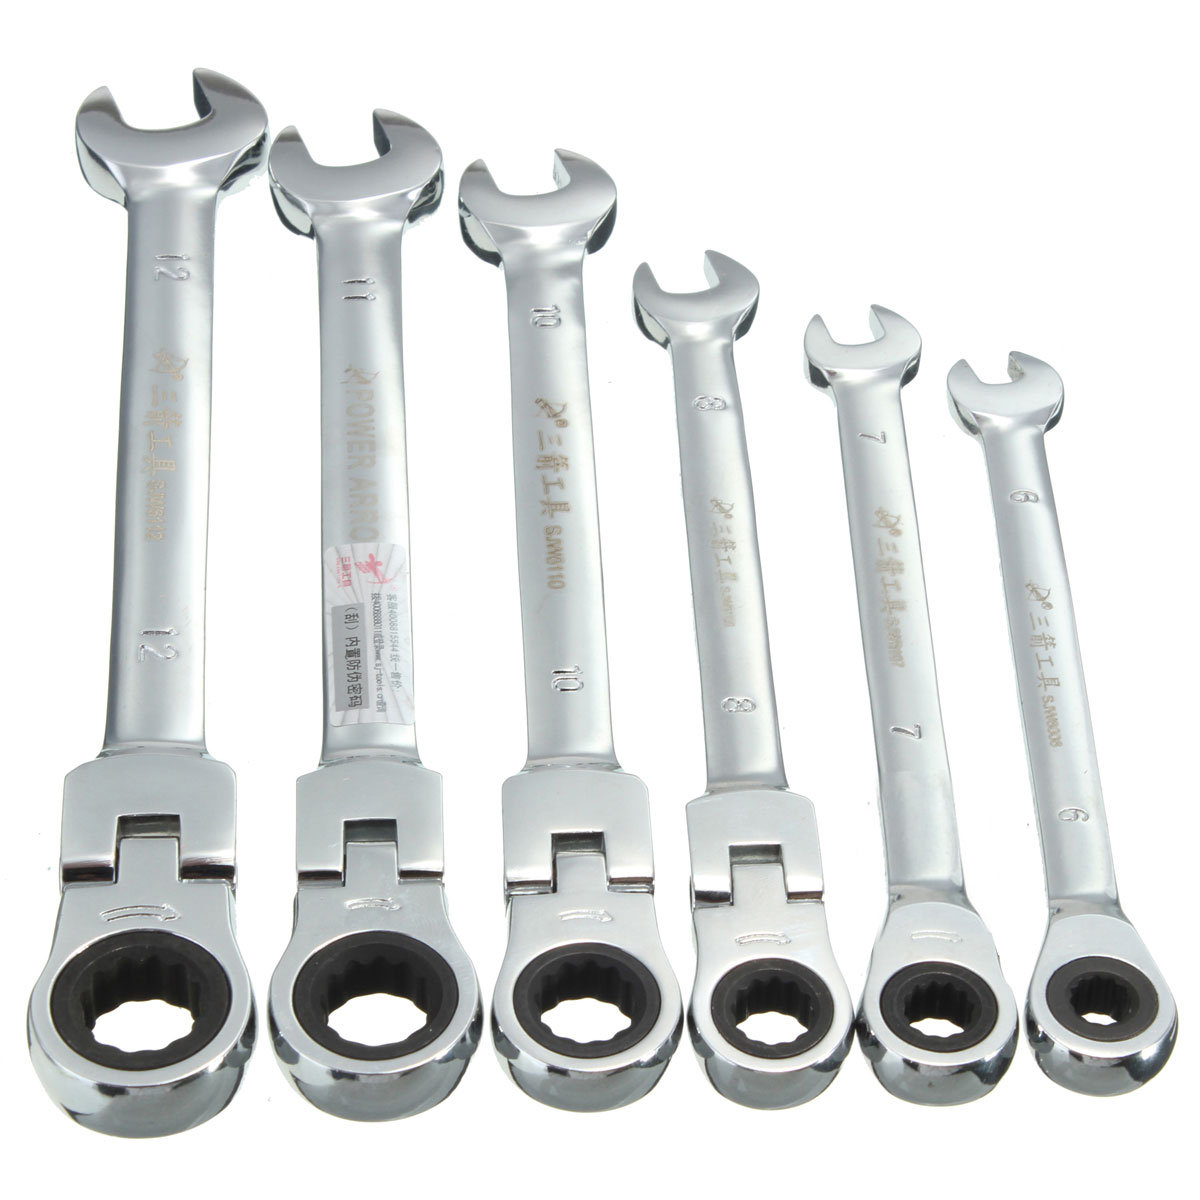 

DANIU Flexible Pivoting Head Ratchet Combination Spanner Wrench Garage Metric Tool 6mm 7mm 8mm 10mm 11mm 12mm, White